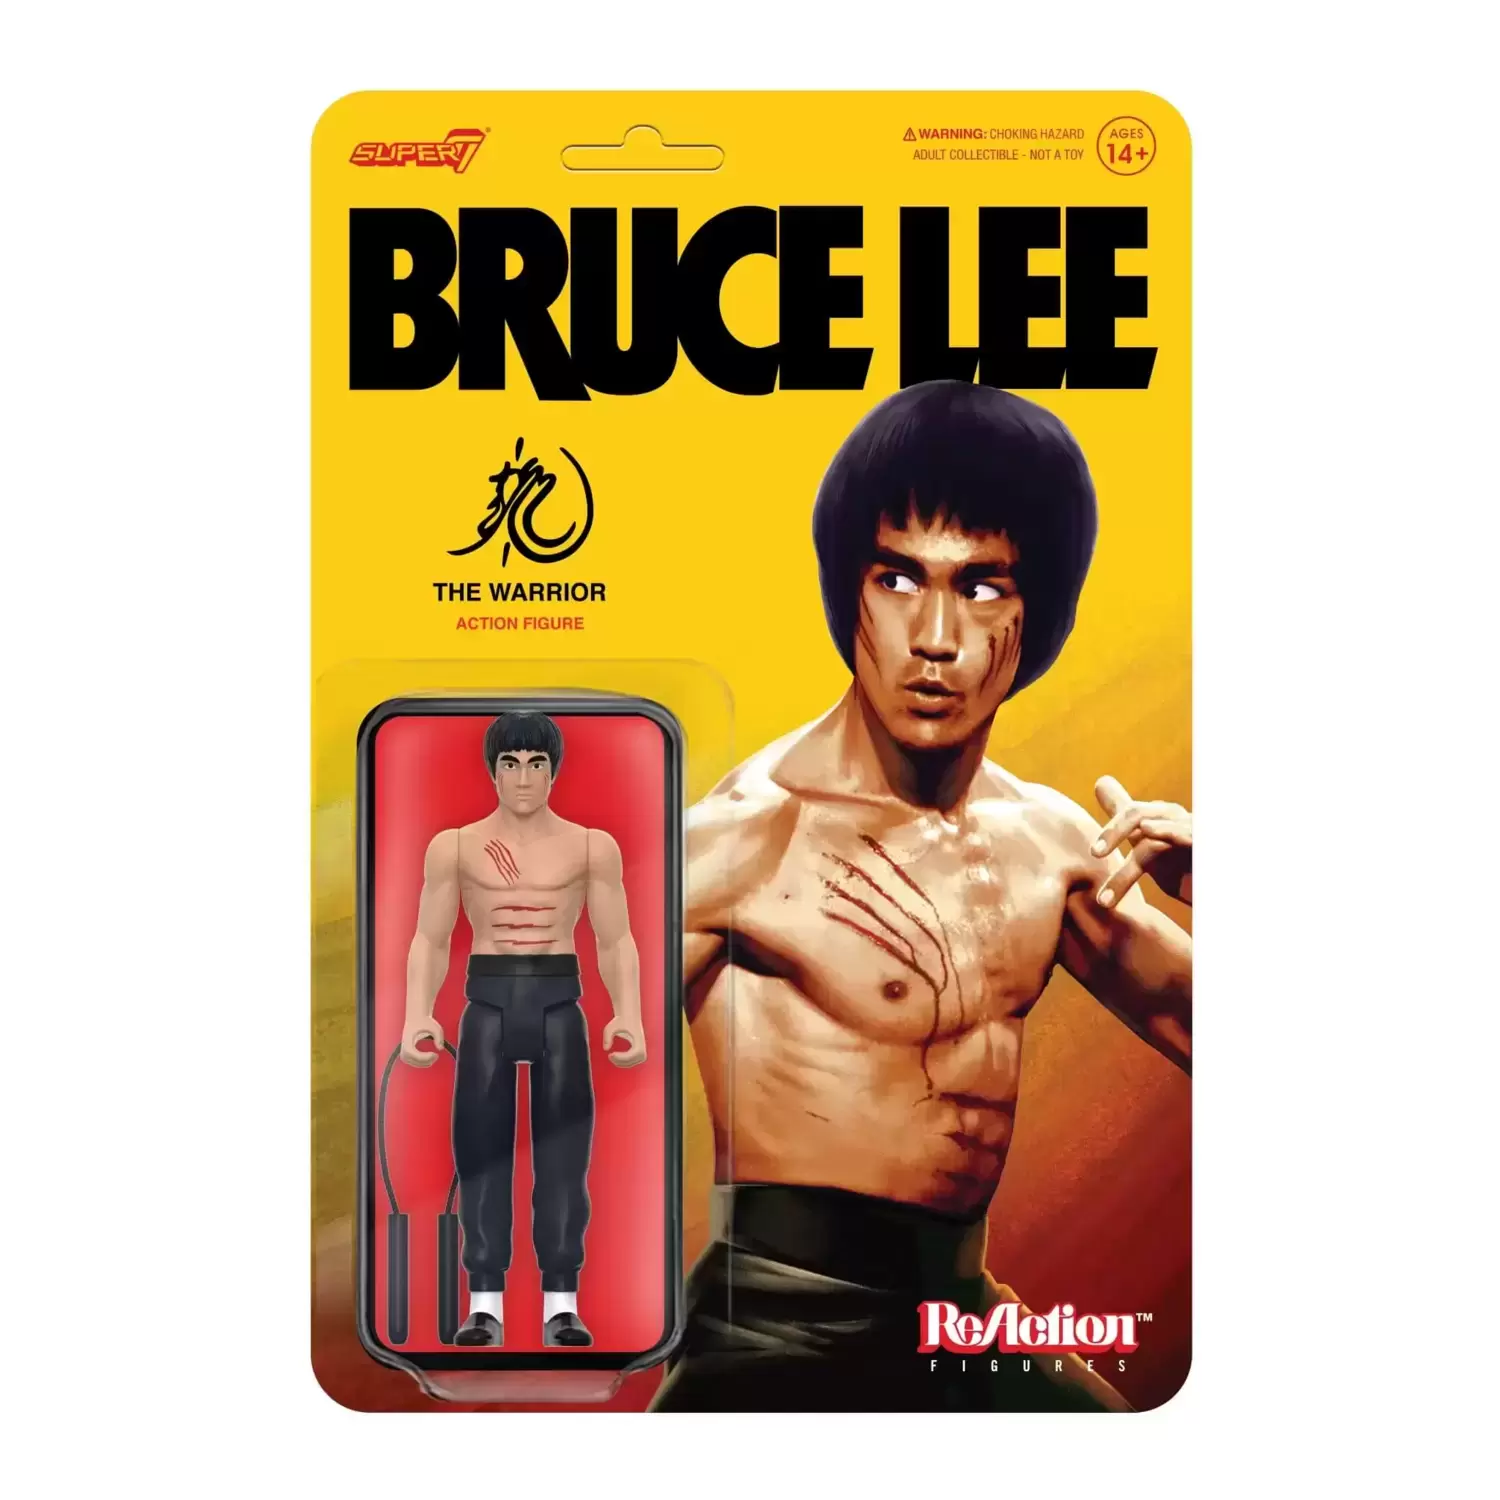 ReAction Figures - Bruce Lee (The Warrior)